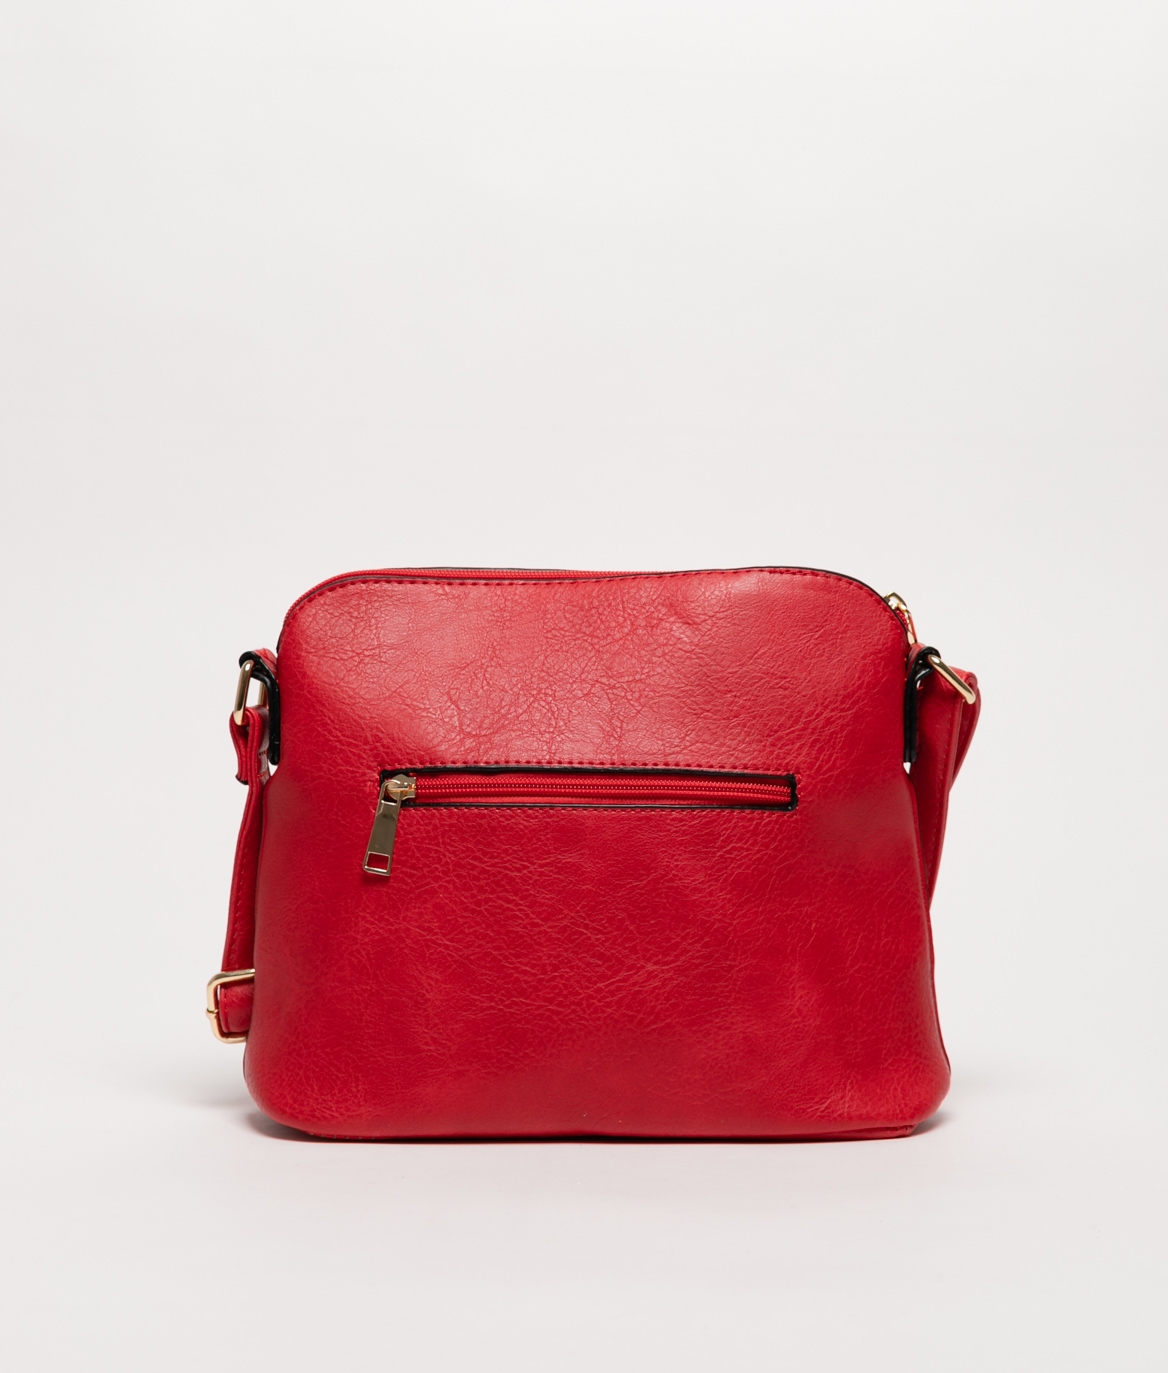 Nimbus shoulder bag - red